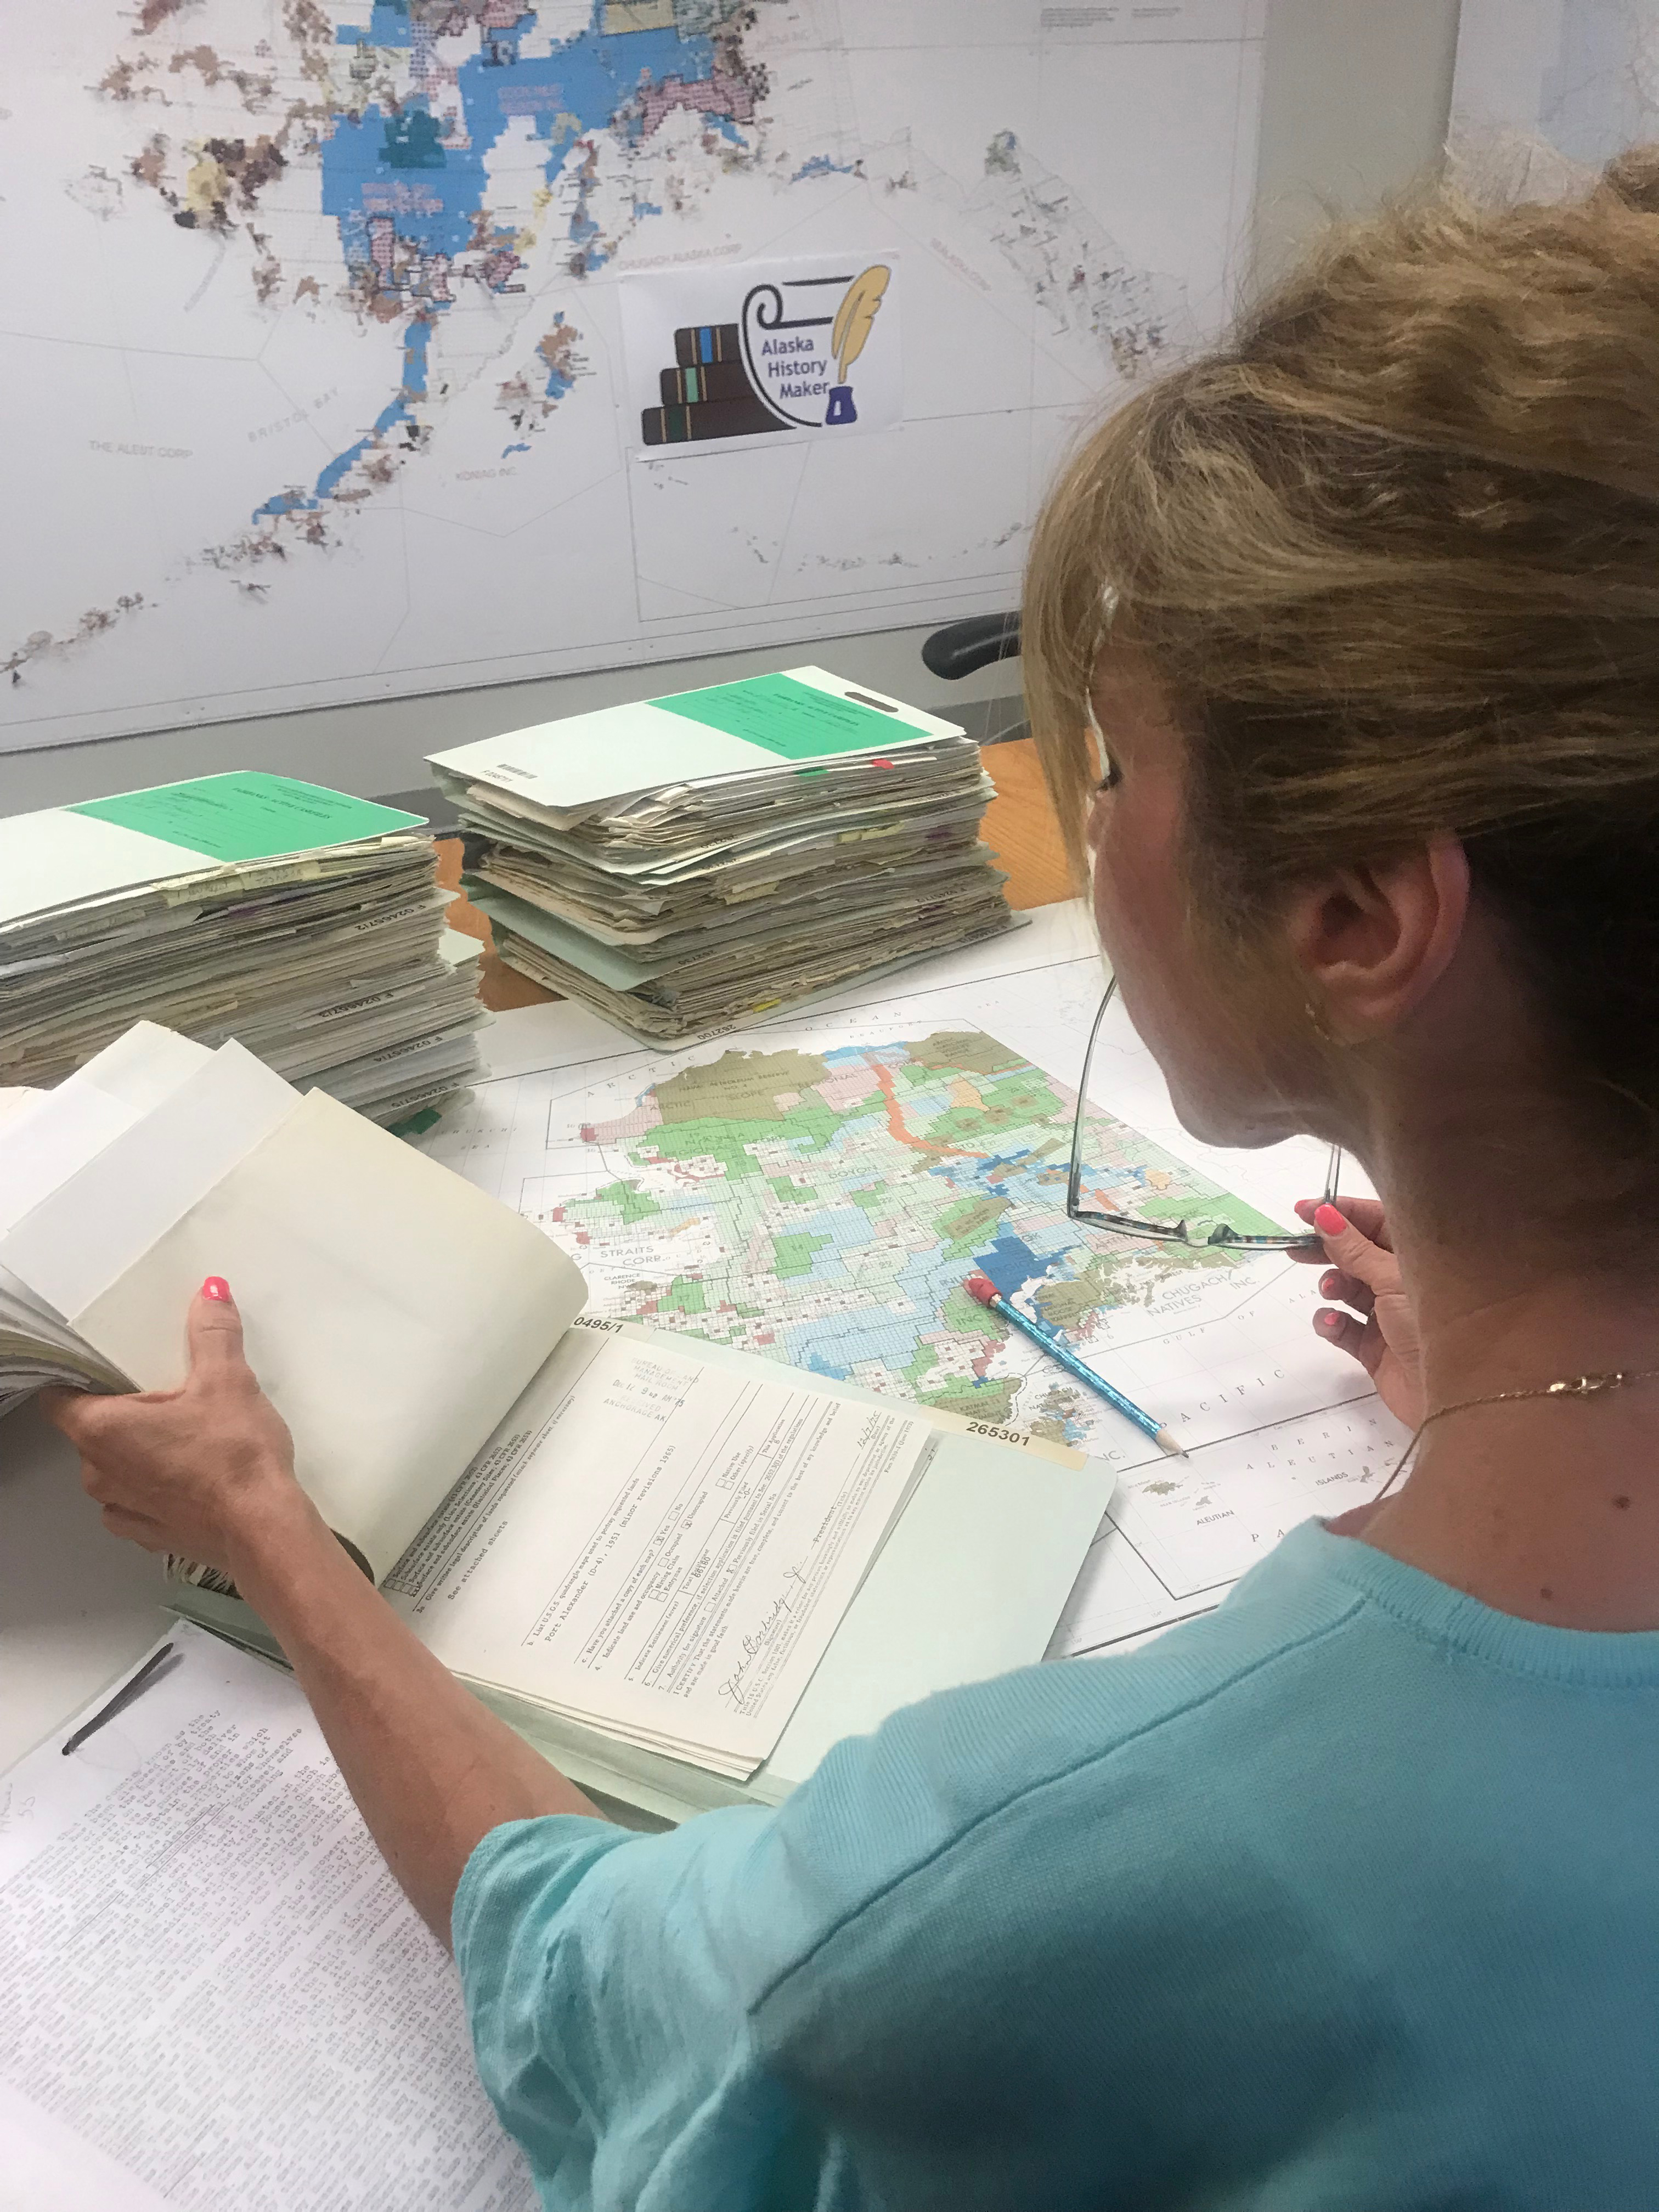 Land Law examiner looking over case files in Alaska